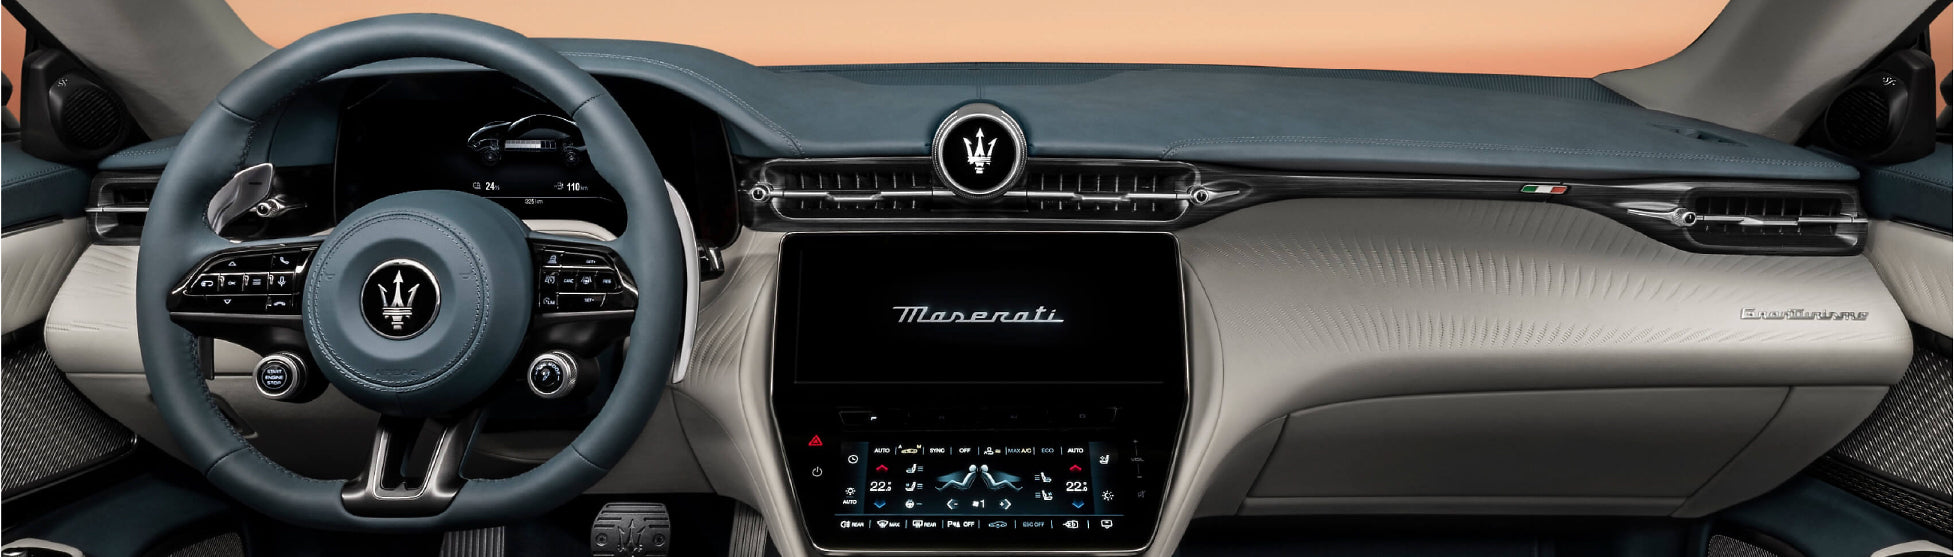 Maserati_Brand_Image.jpg__PID:80e2c7c4-7eab-4eb3-80a9-4d1663b7000e